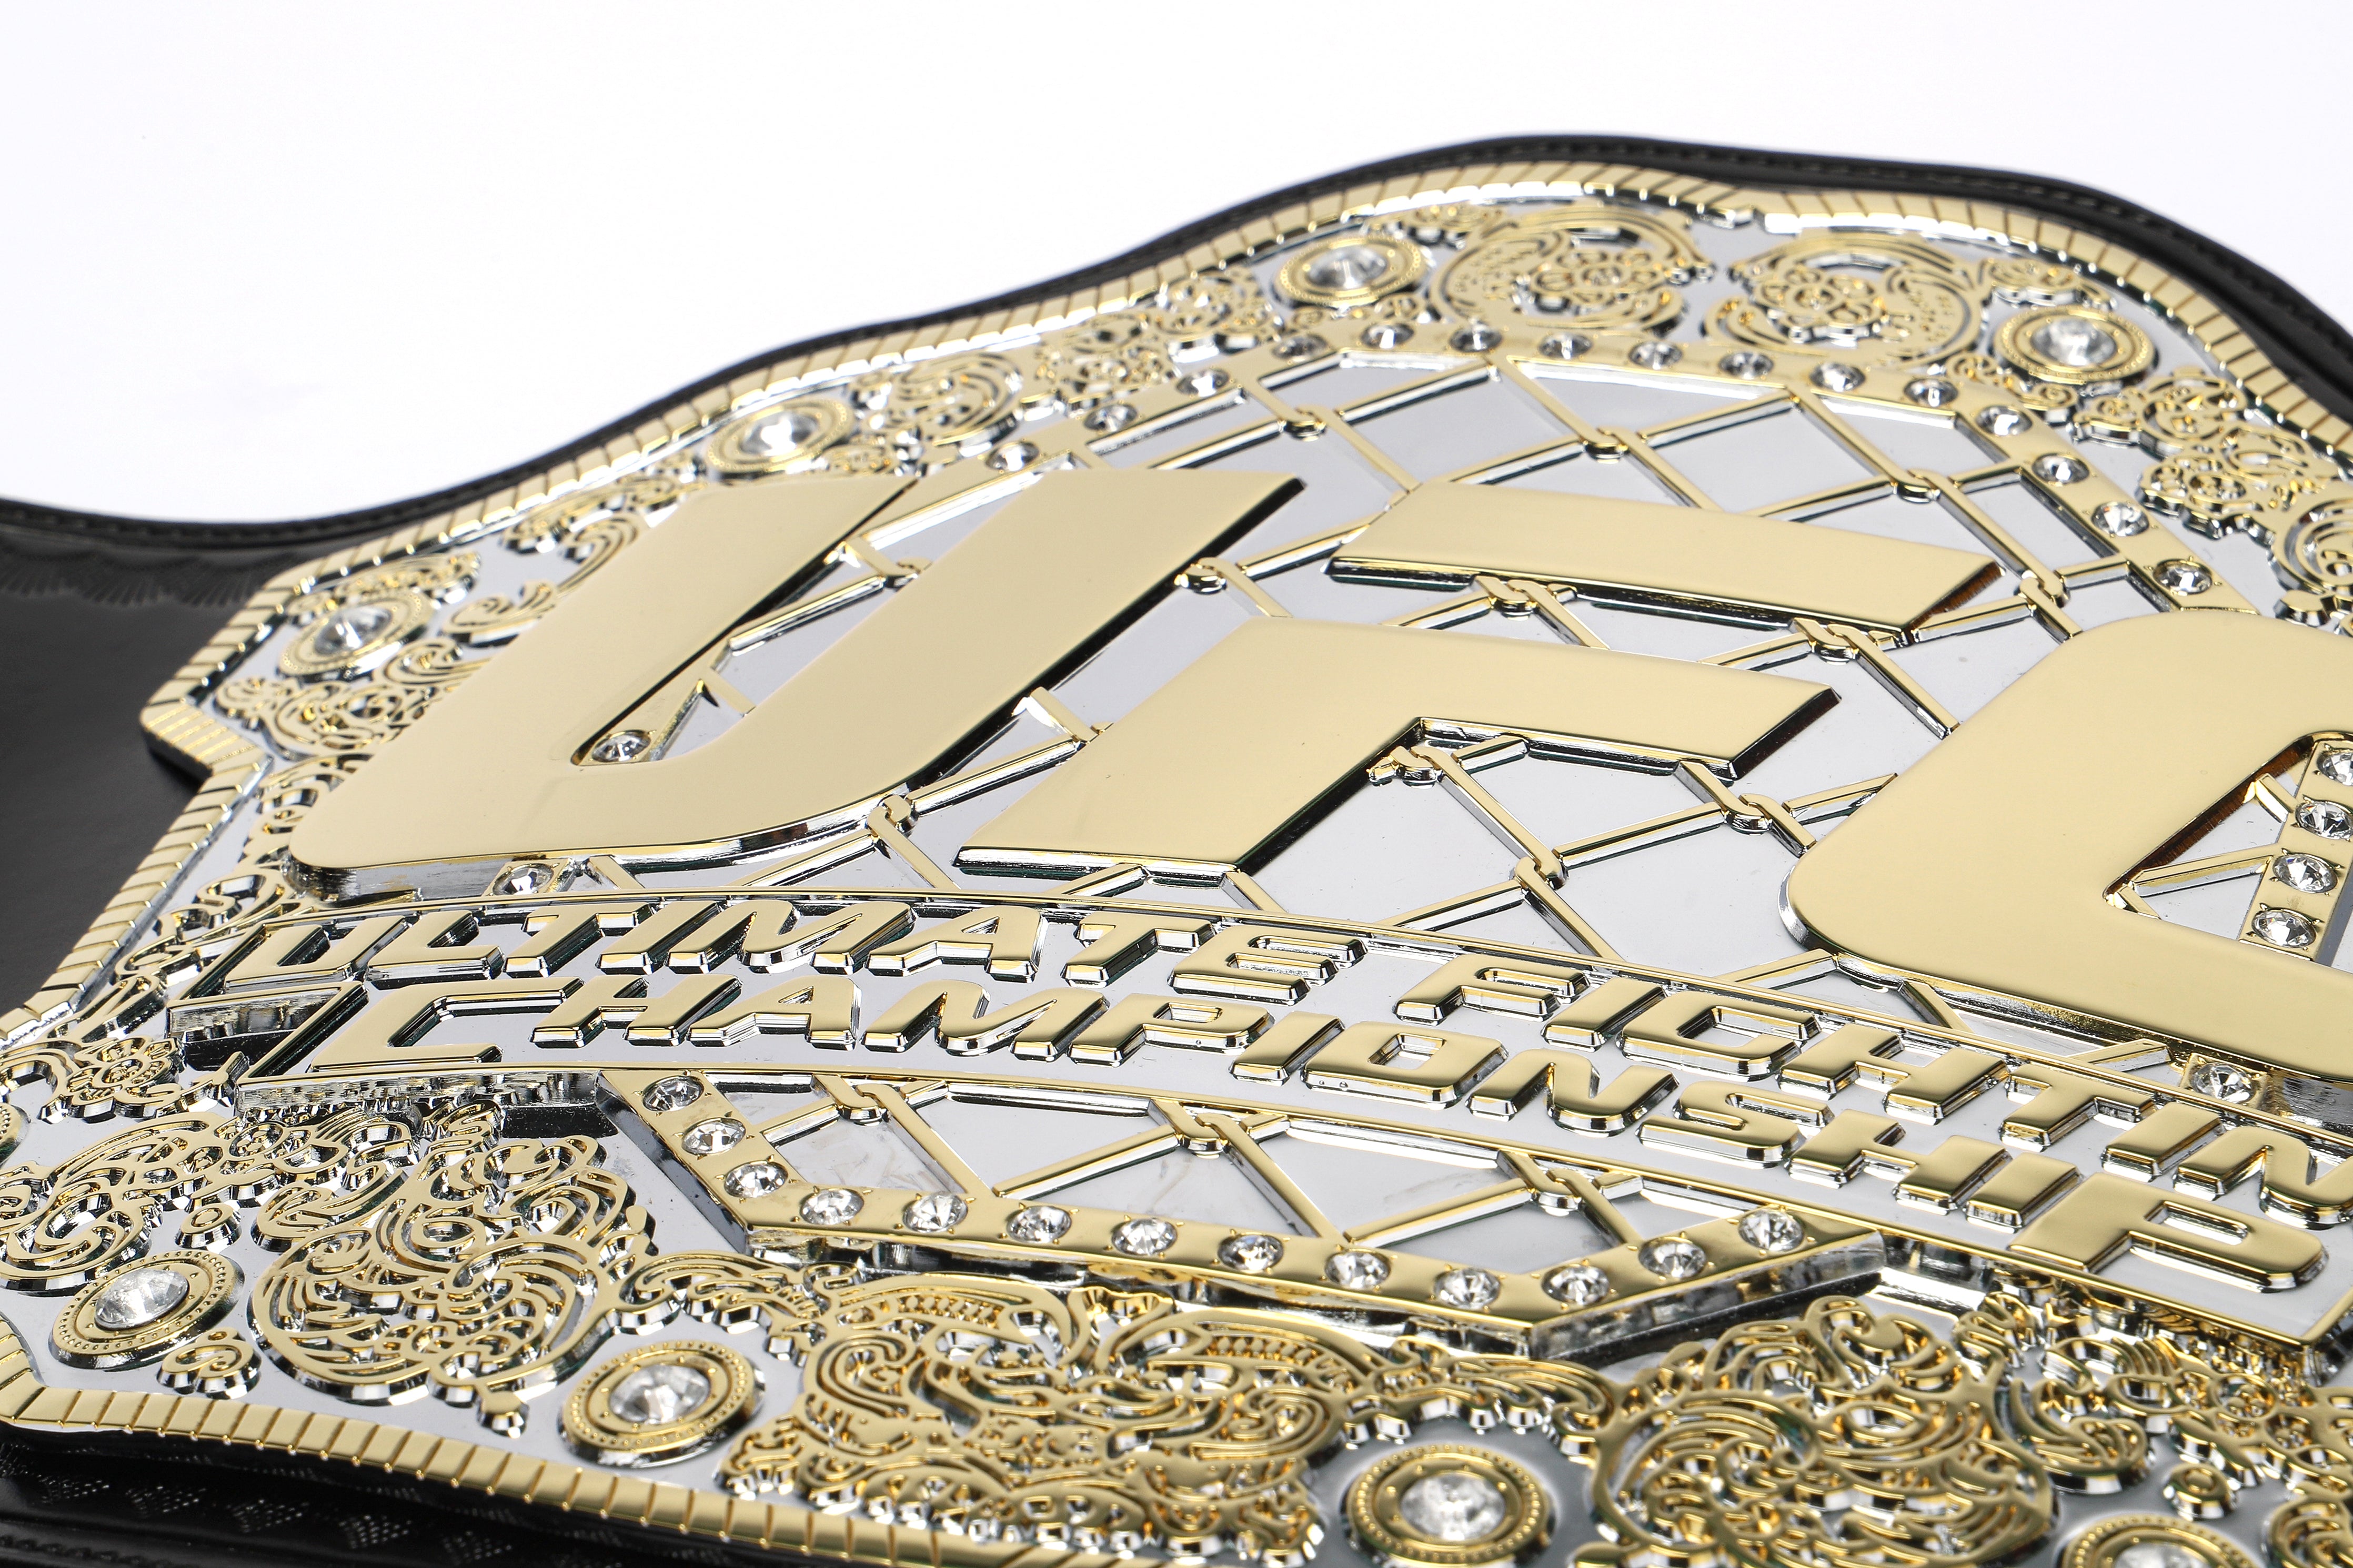 Jon Jones Signed UFC Classic Championship Replica Belt